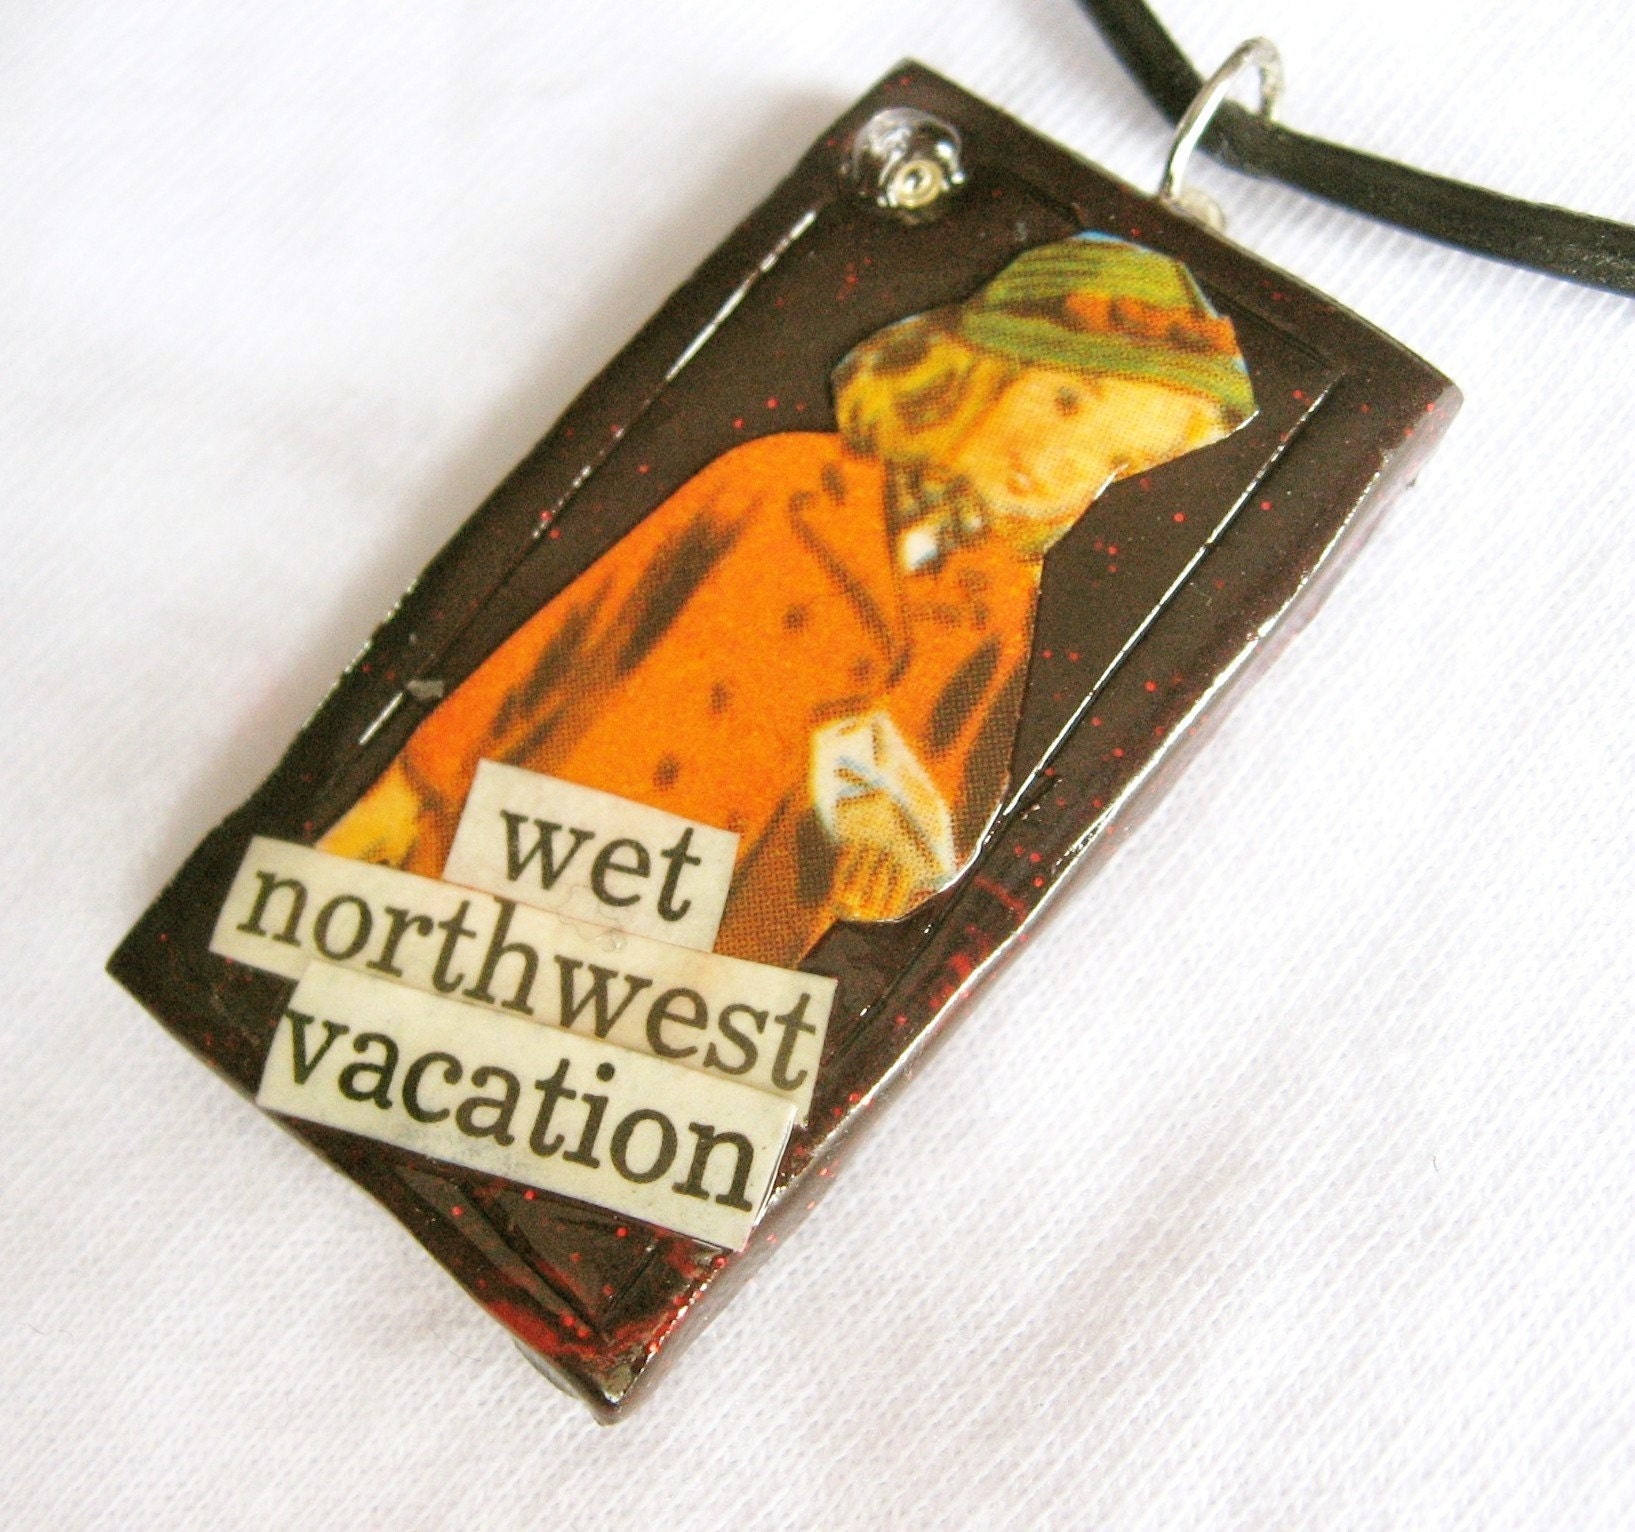 Wet Northwest Vacation pendant (on leather cord)